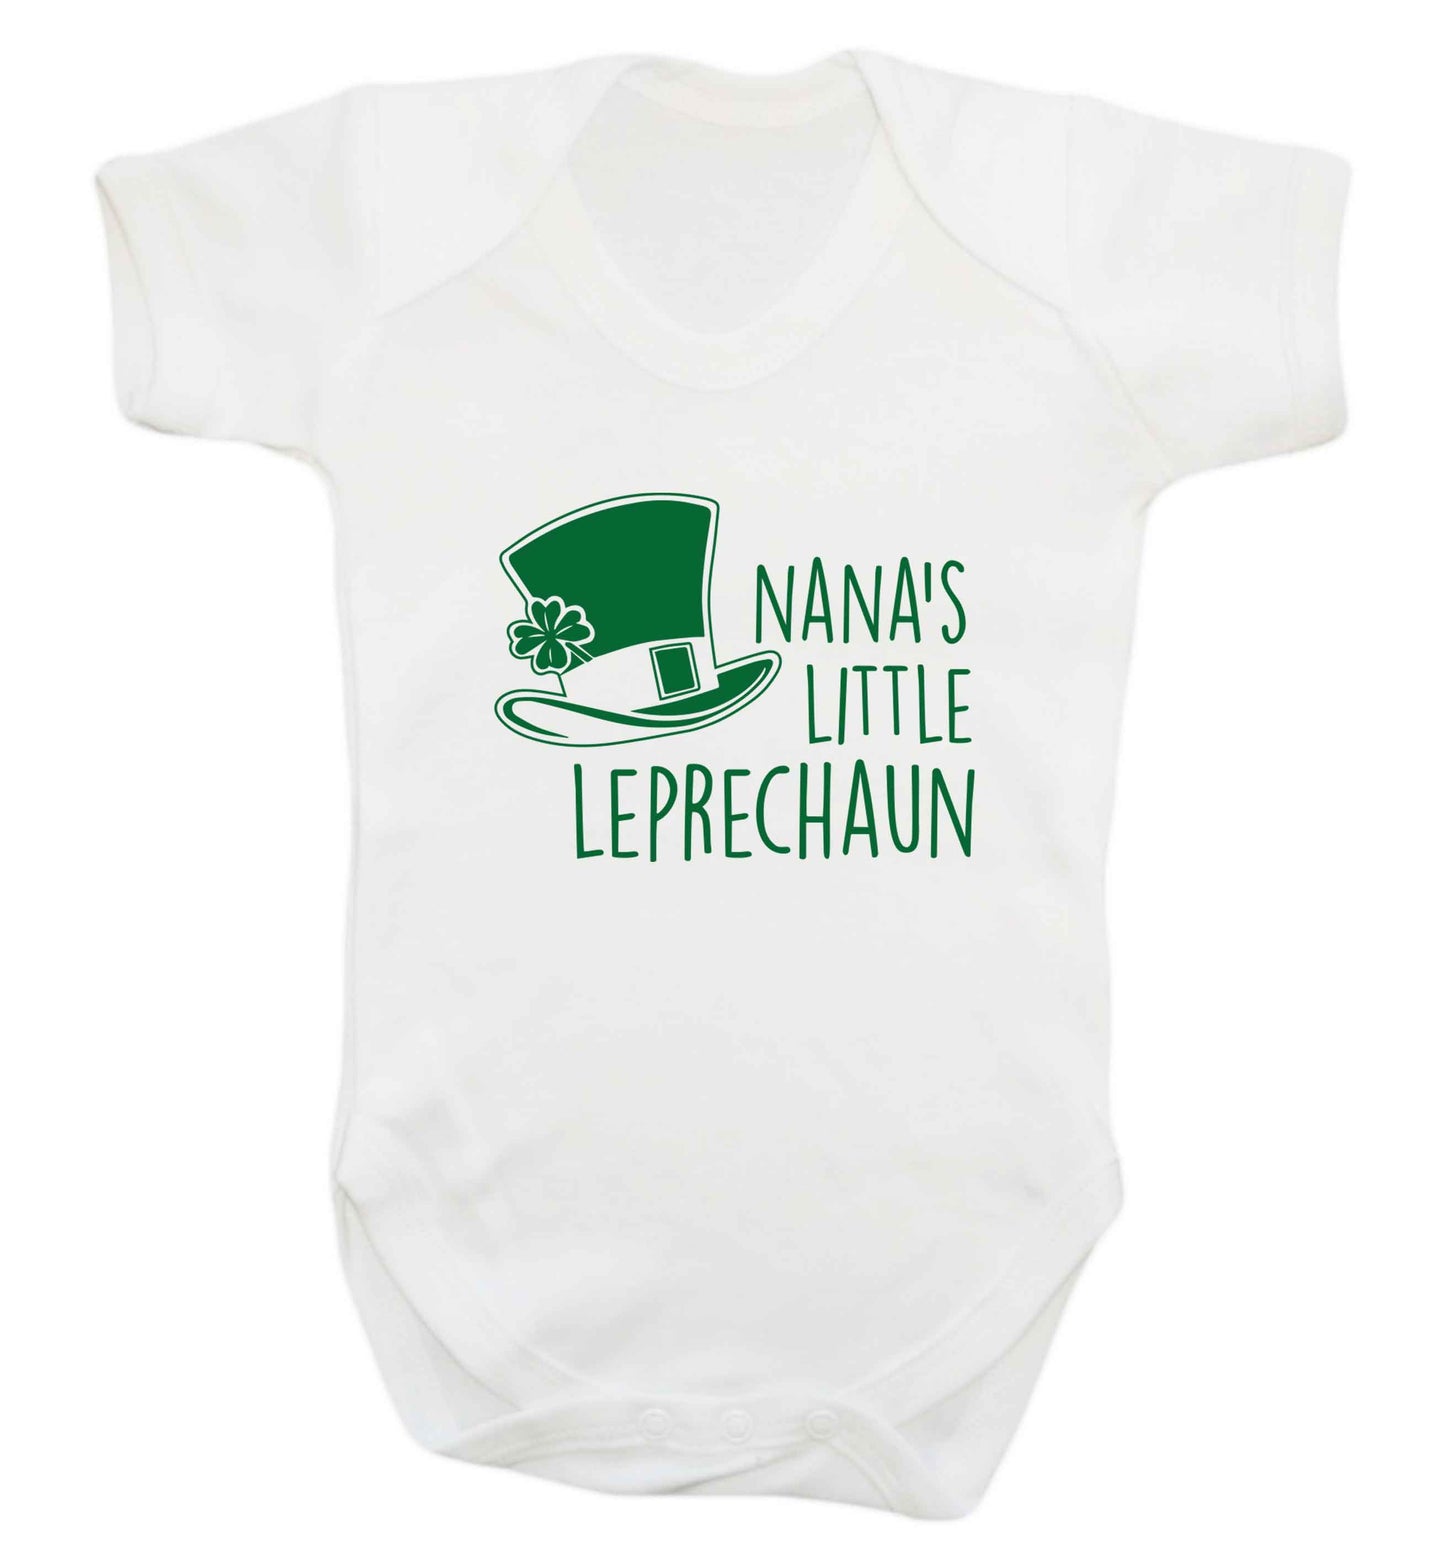 Nana's little leprechaun baby vest white 18-24 months